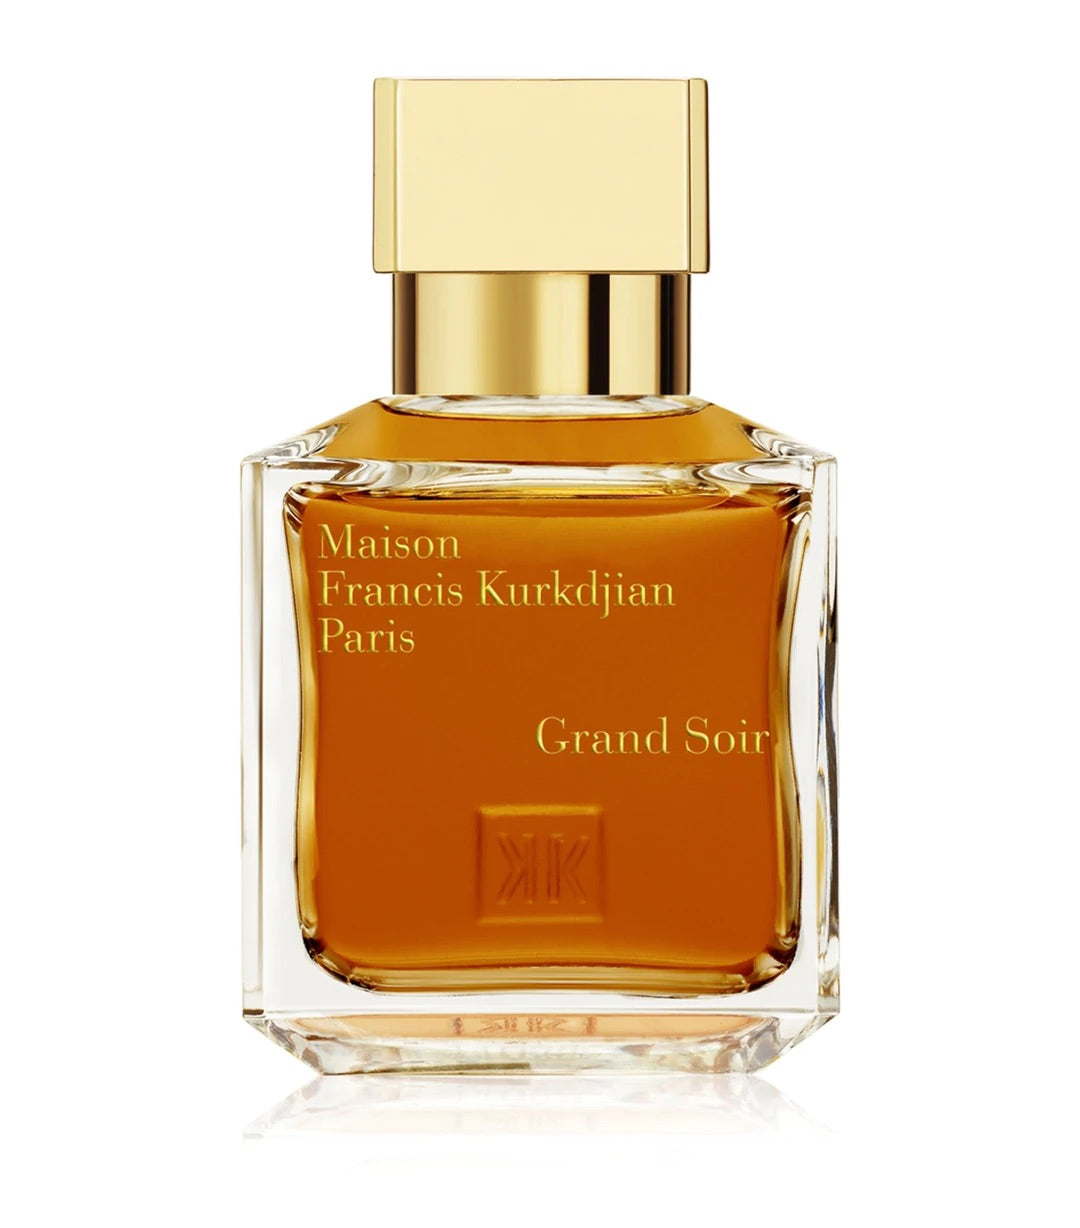 Maison Francis Kurkdjian Grand Soir Eau De Parfum Samples